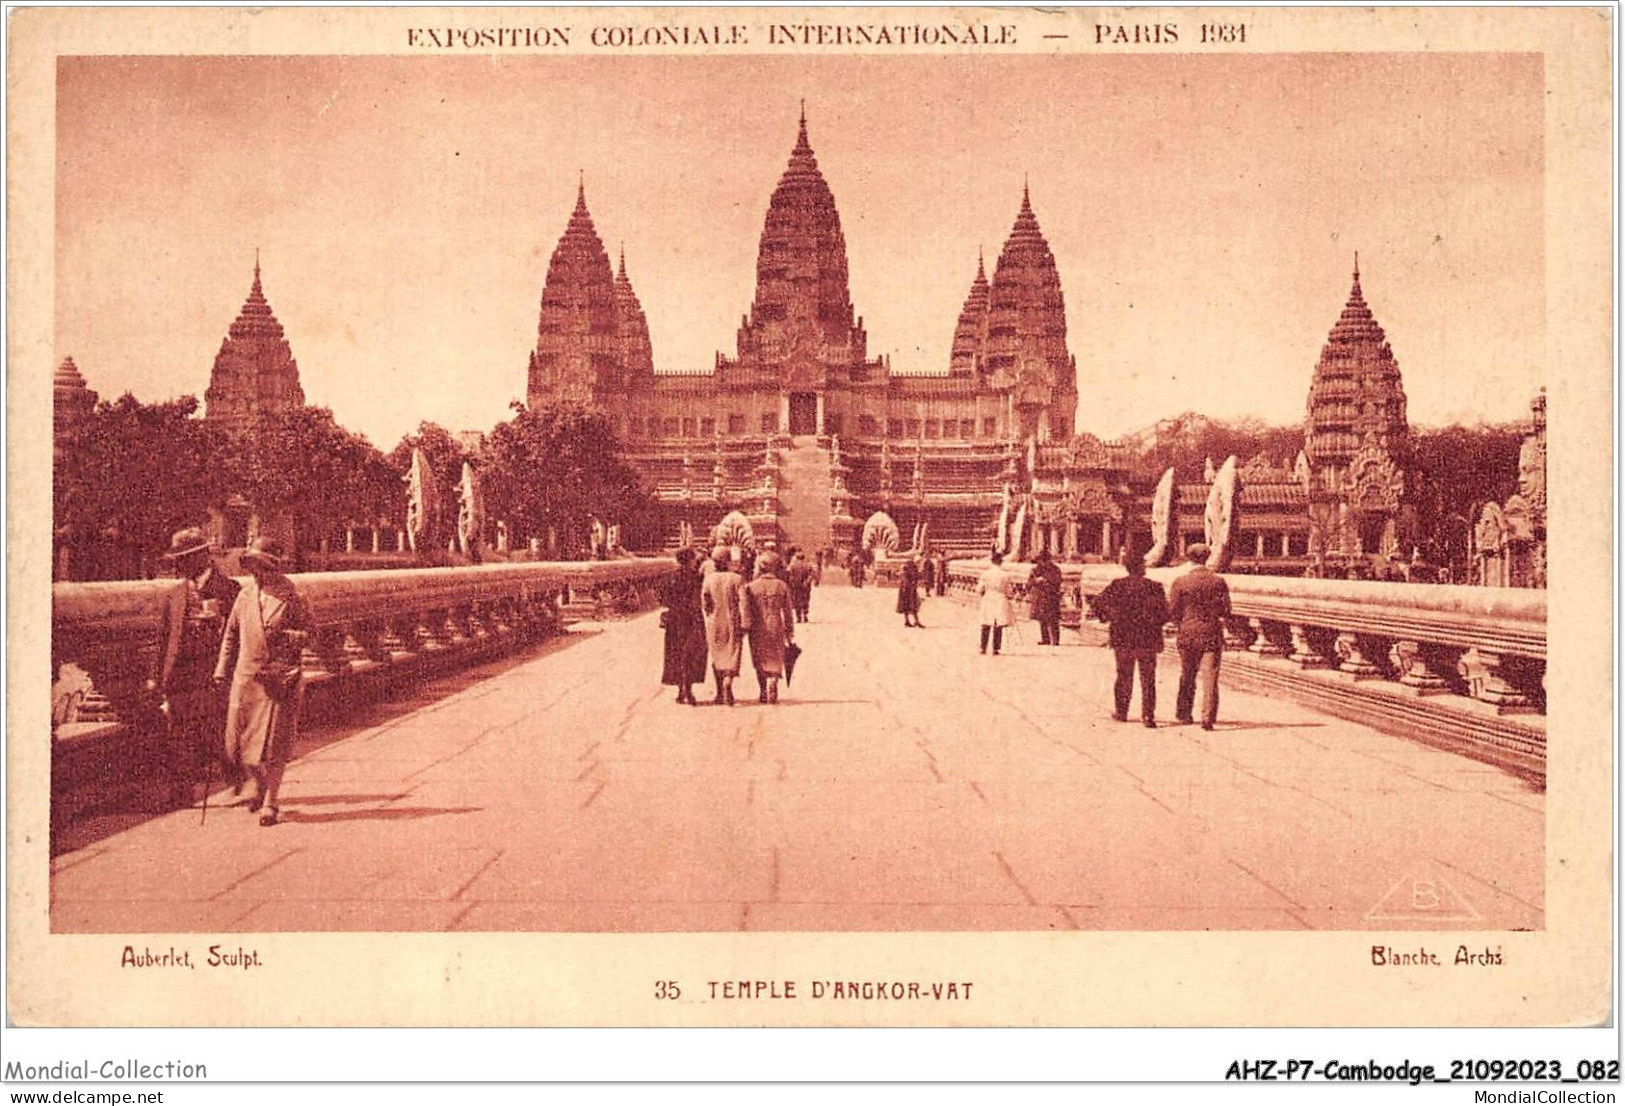 AHZP7-CAMBODGE-0637 - EXPOSITION COLONIALE INTERNATIONALE - PARIS 1931 - TEMPLE D'ANGKOR-VAT - Cambodge